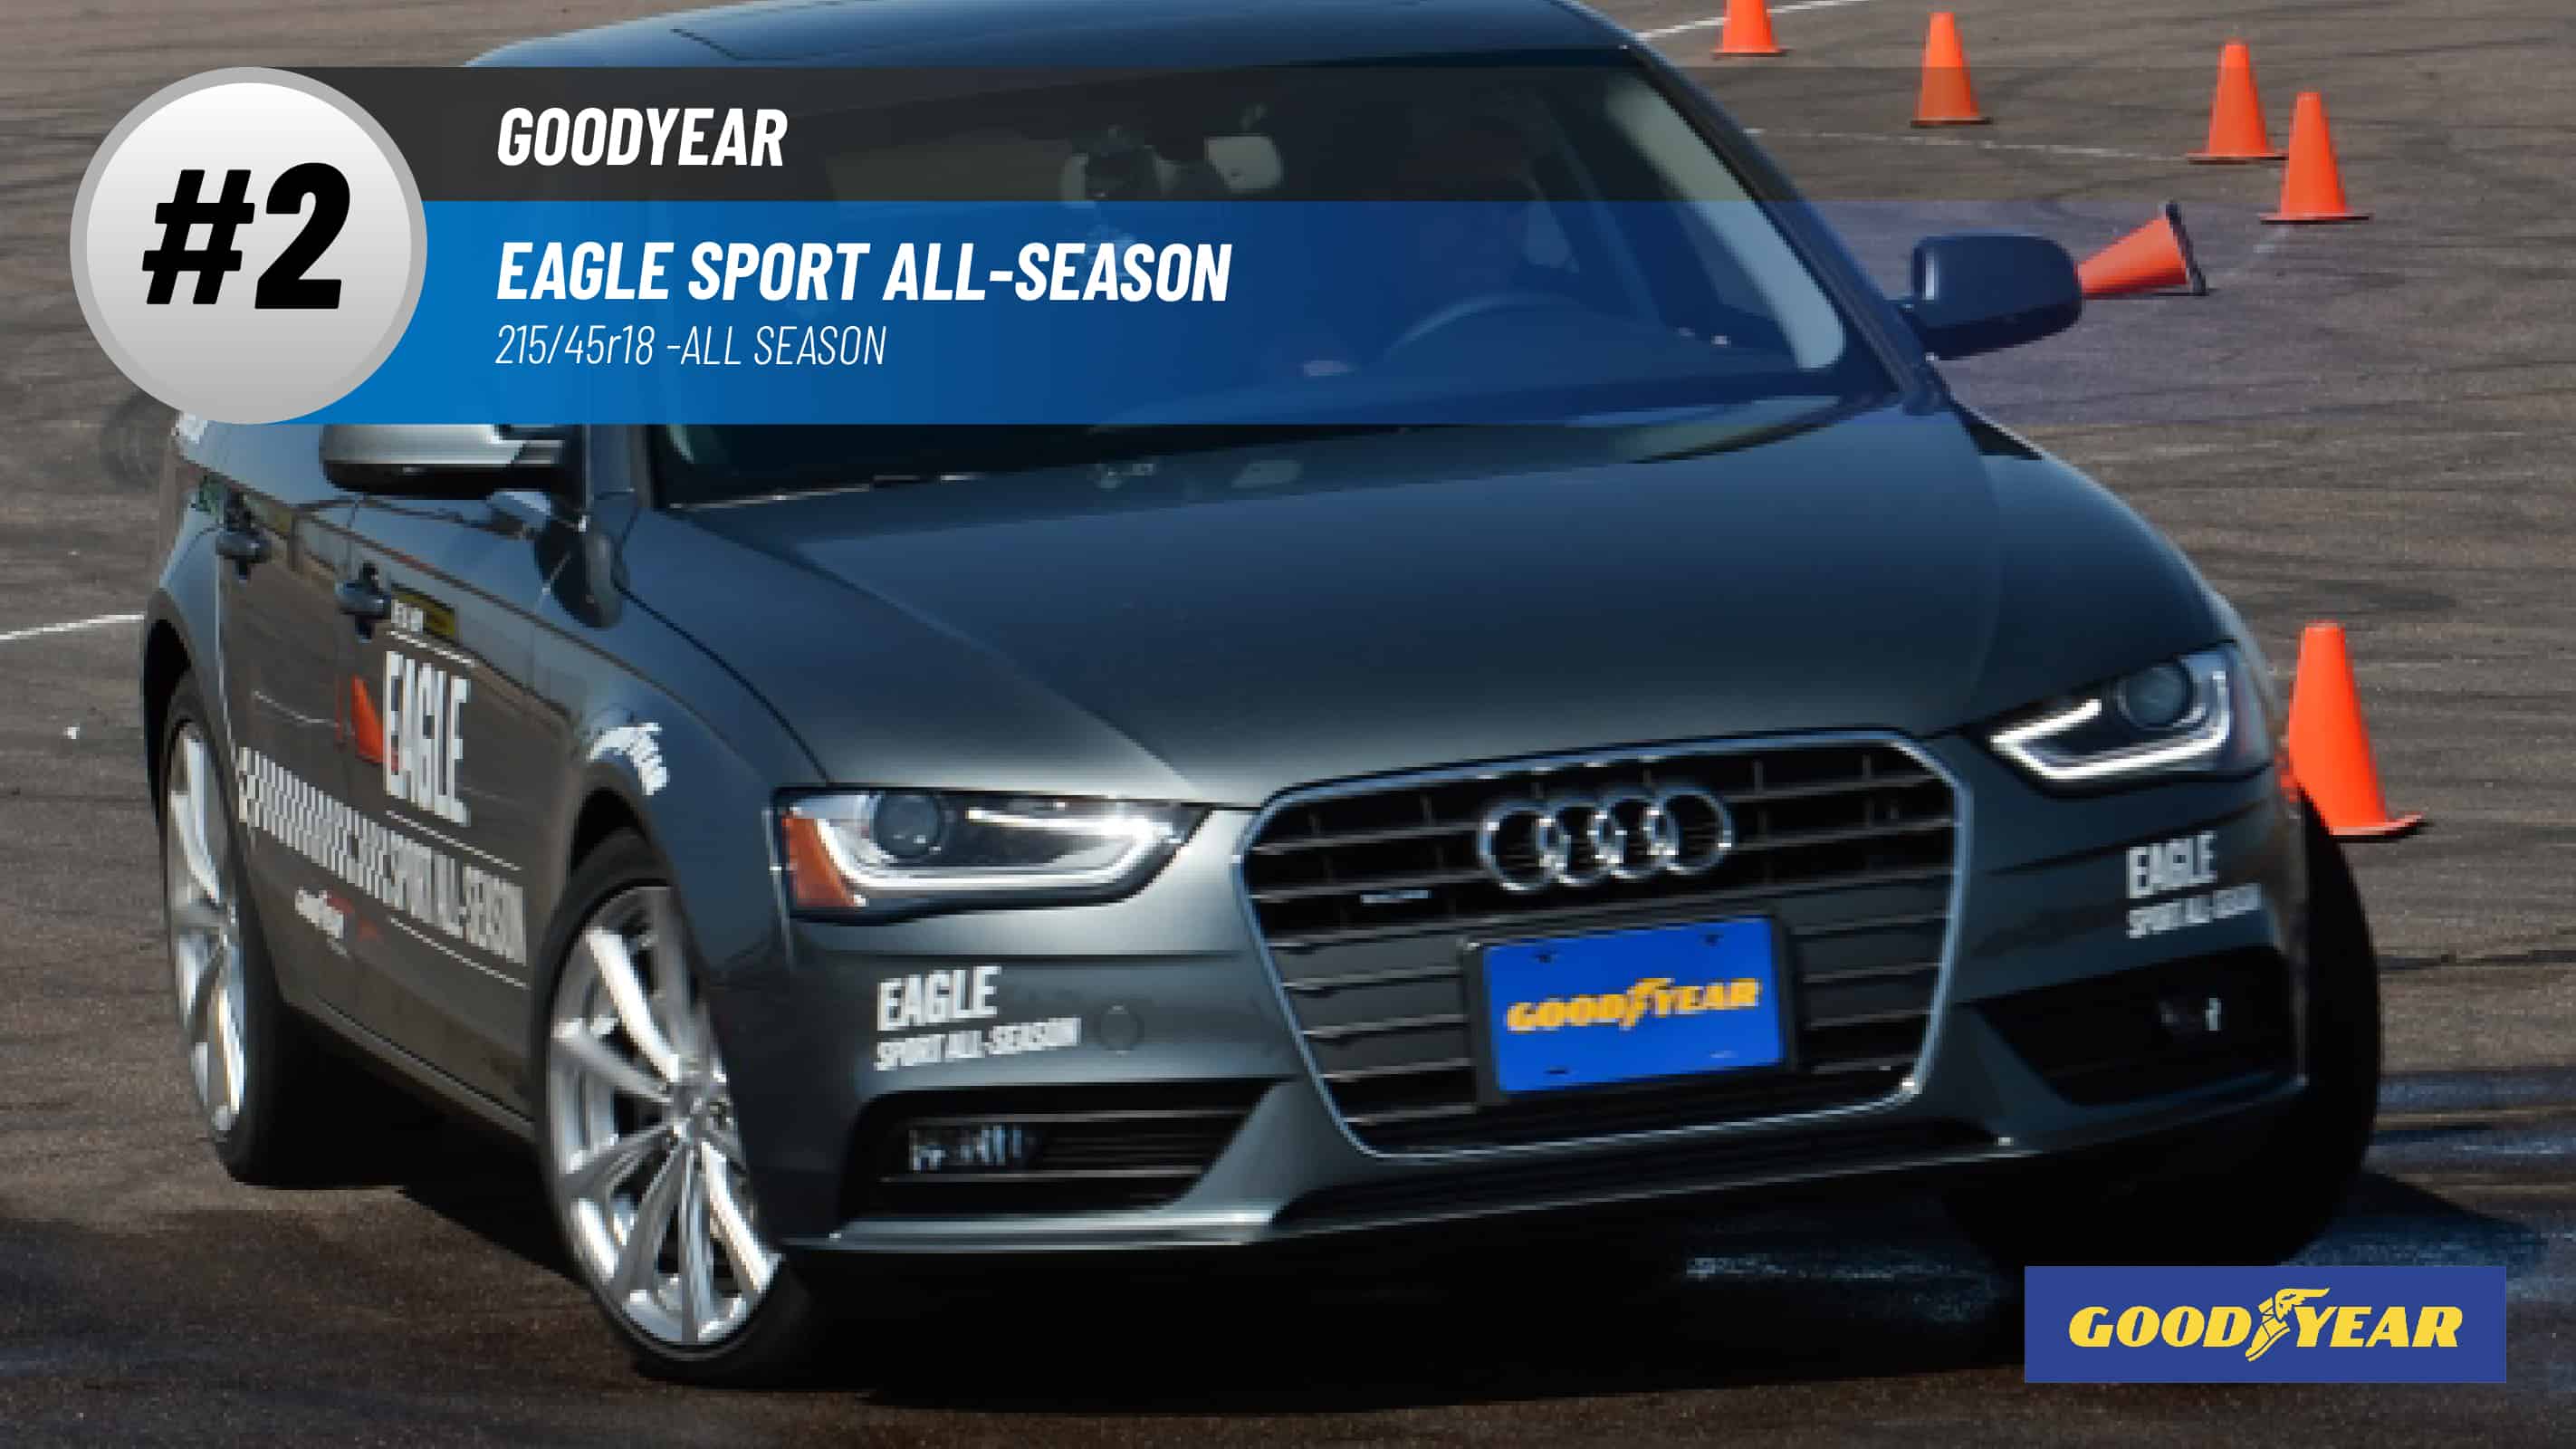 Top #2 All Season Tires: Goodyear Eagle Sport All-Season – 215/45r18